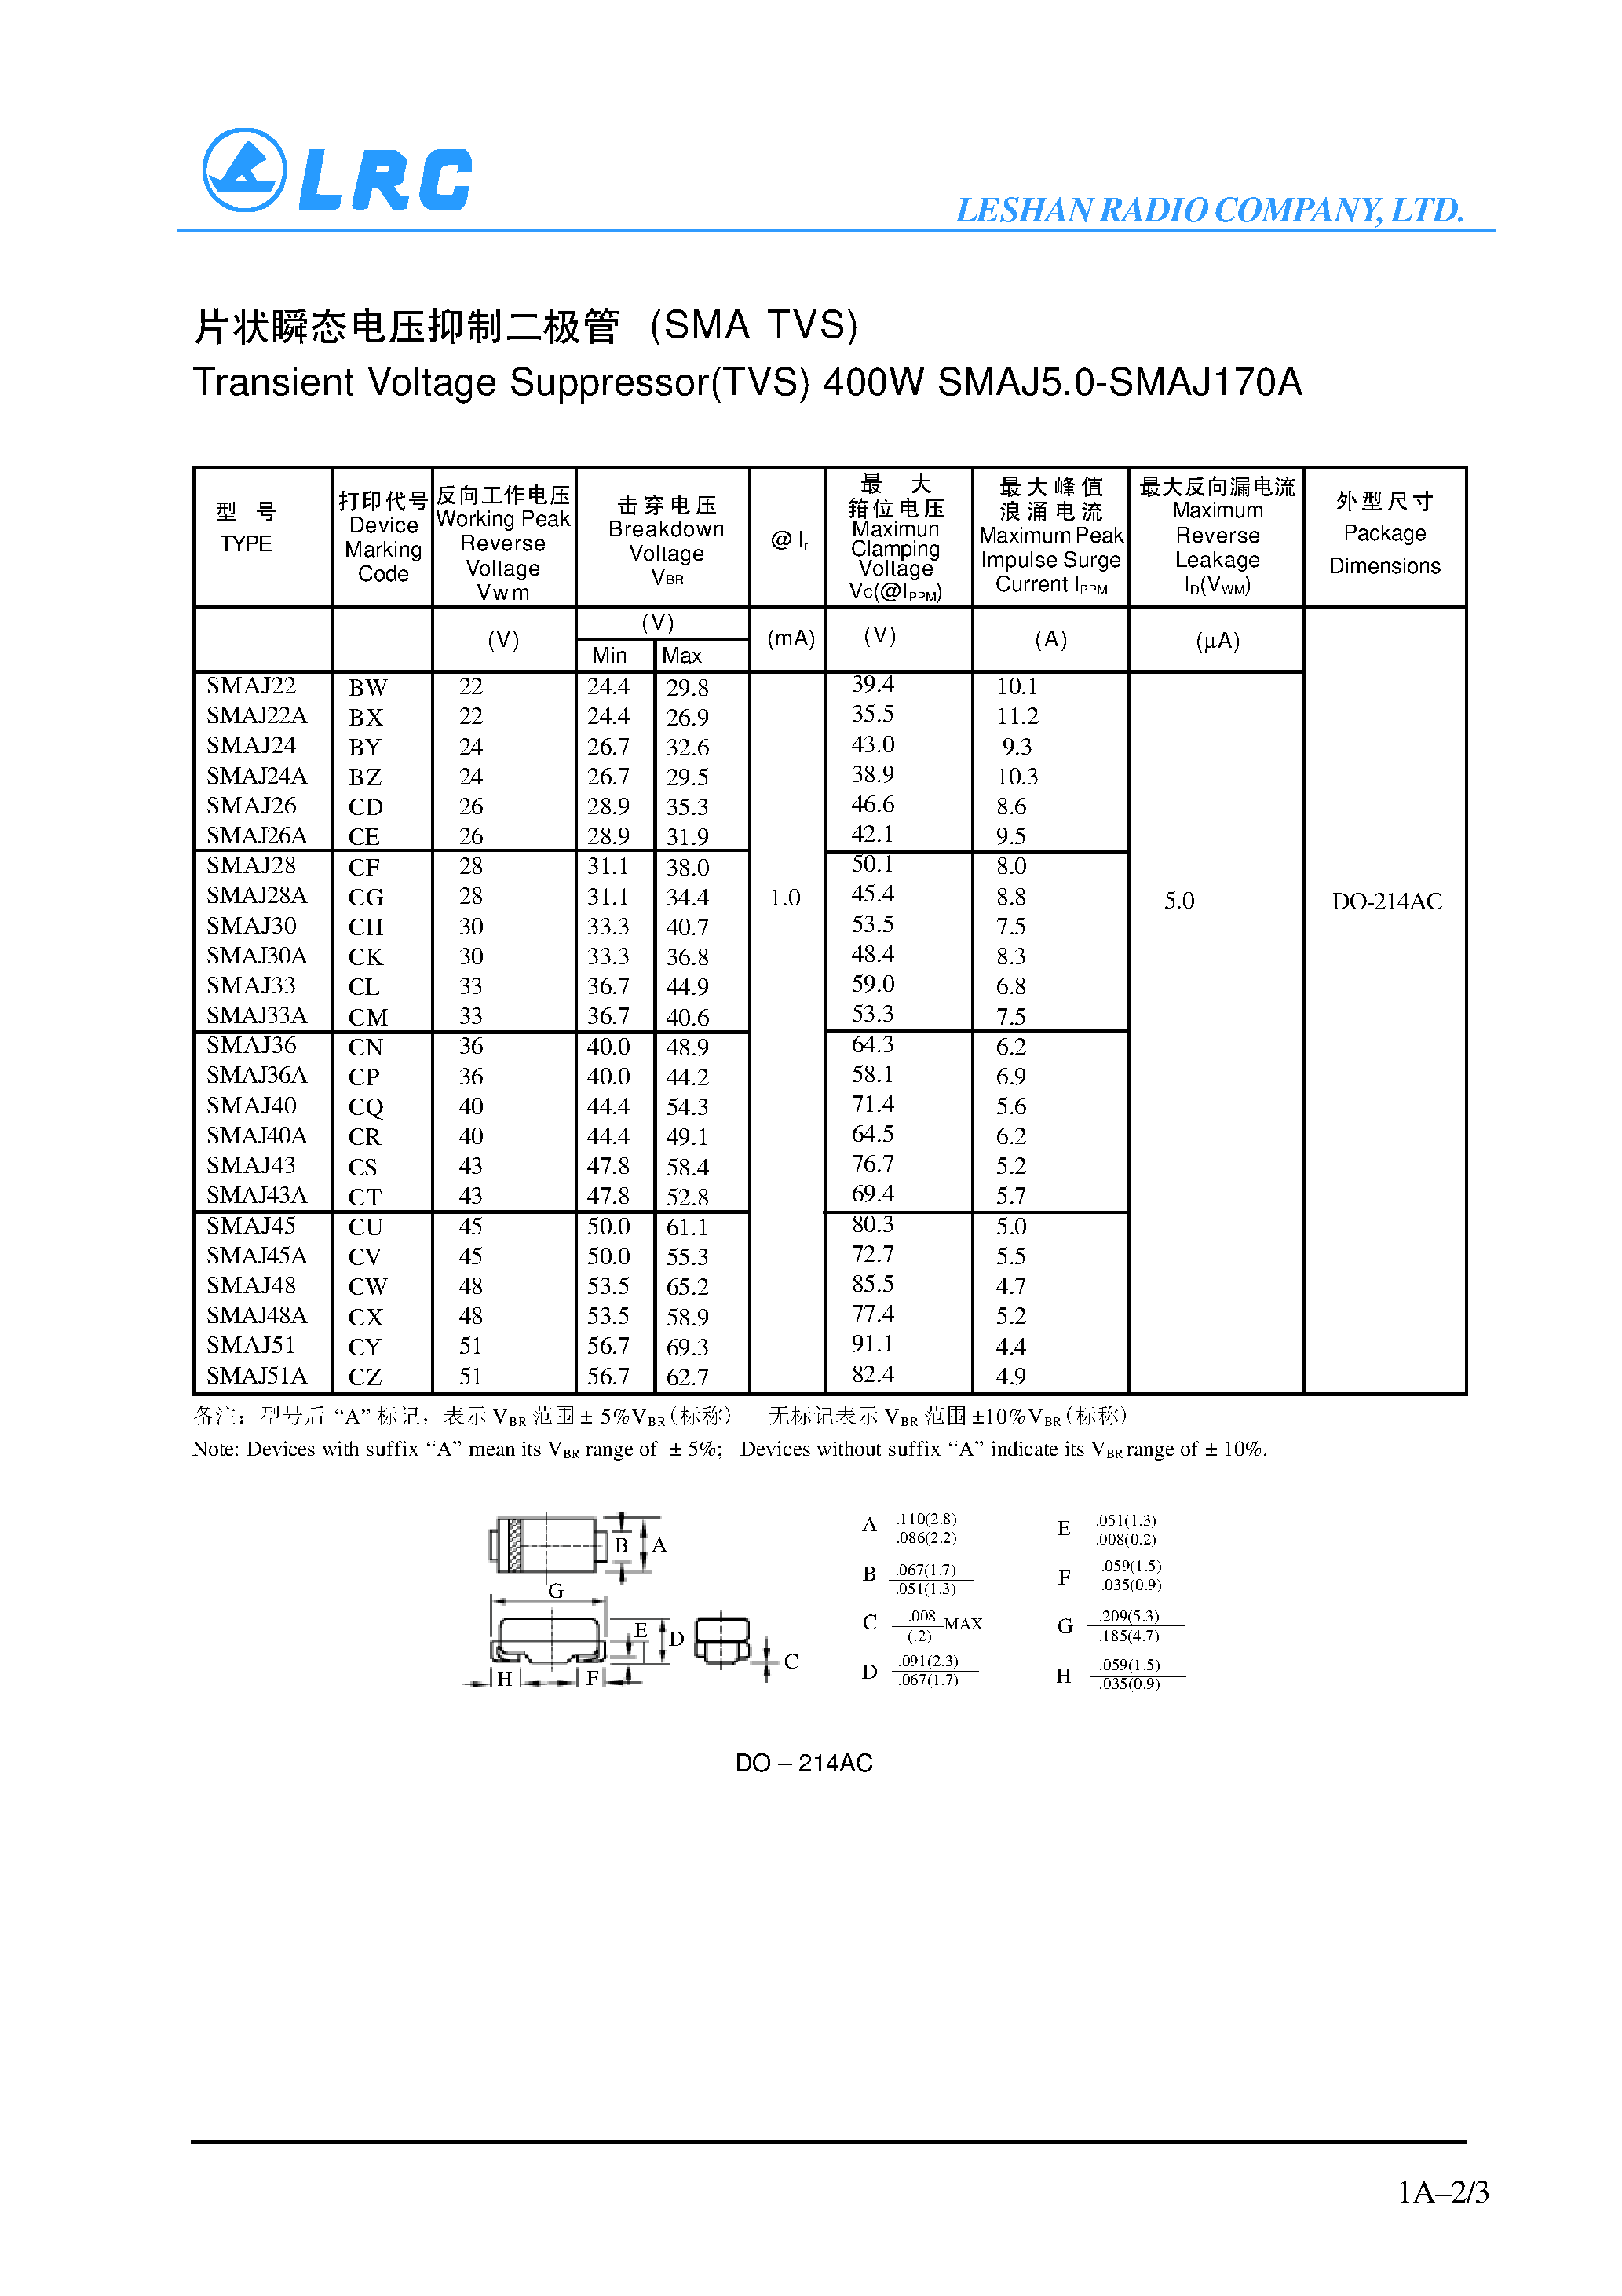 Datasheet 400WSMAJ5.0 - Transient Voltage Suppressor(TVS)400W SMAJ5.0-SMAJ170A page 2